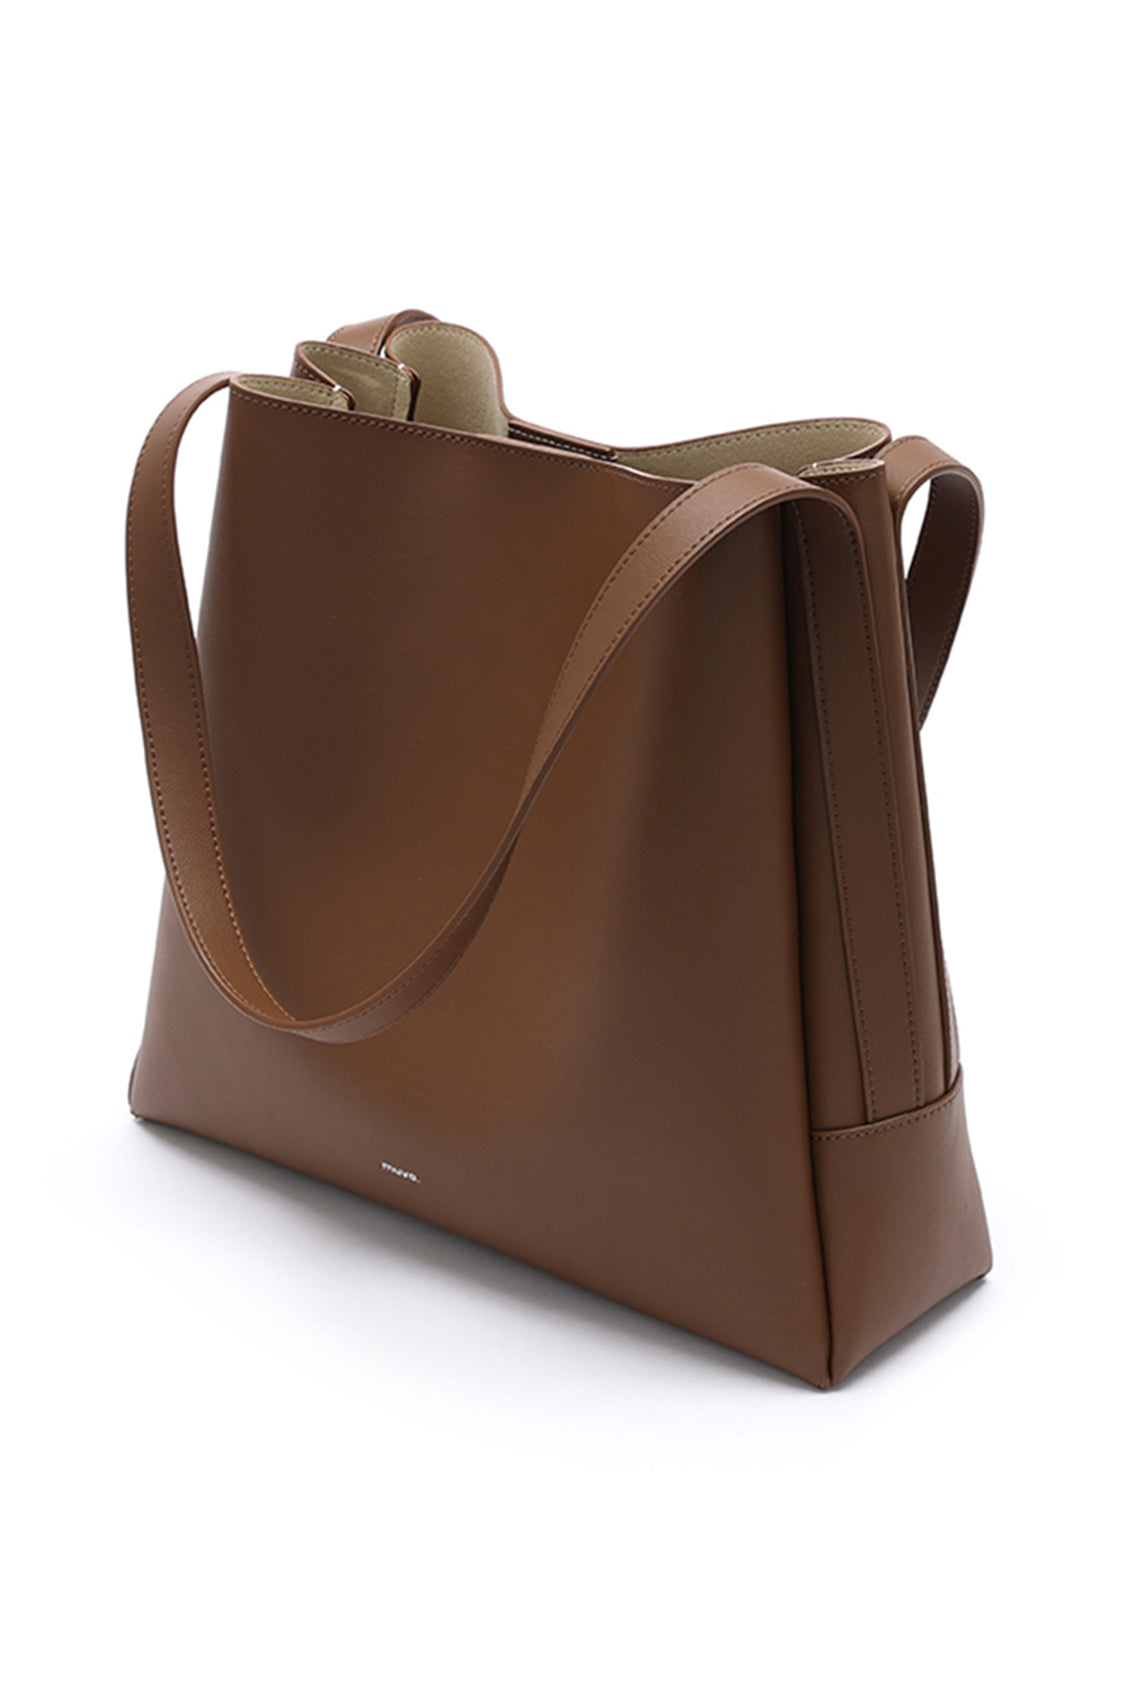 Vintage Genuine Leather Tote bag for Women Satchel